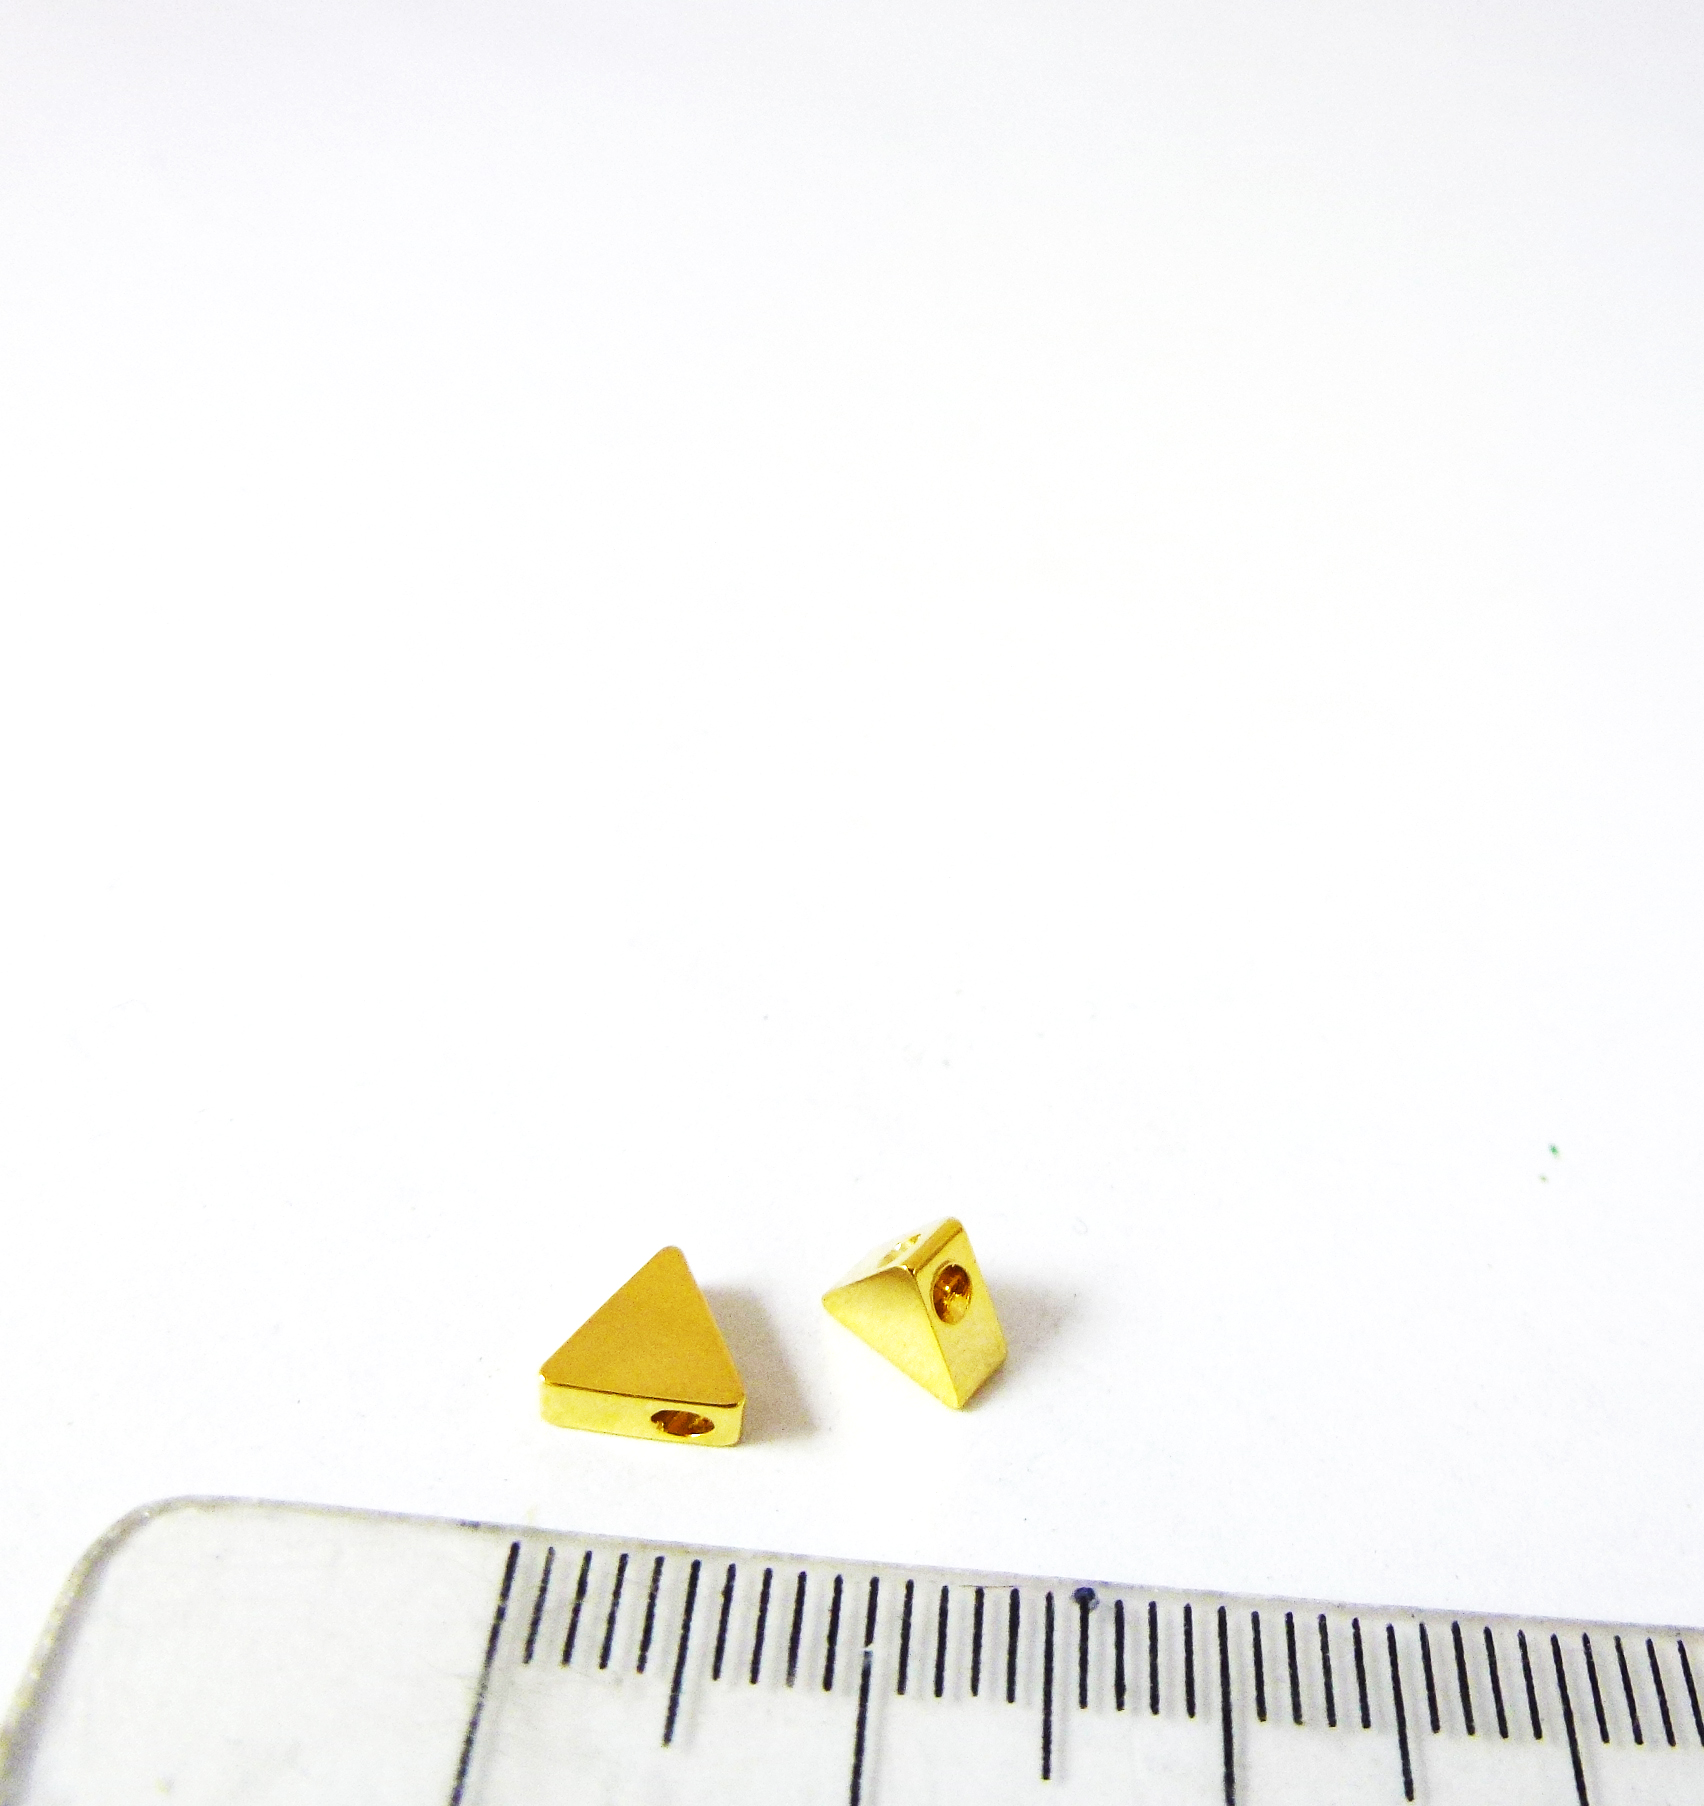 6MM銅鍍金色橫洞正三角形